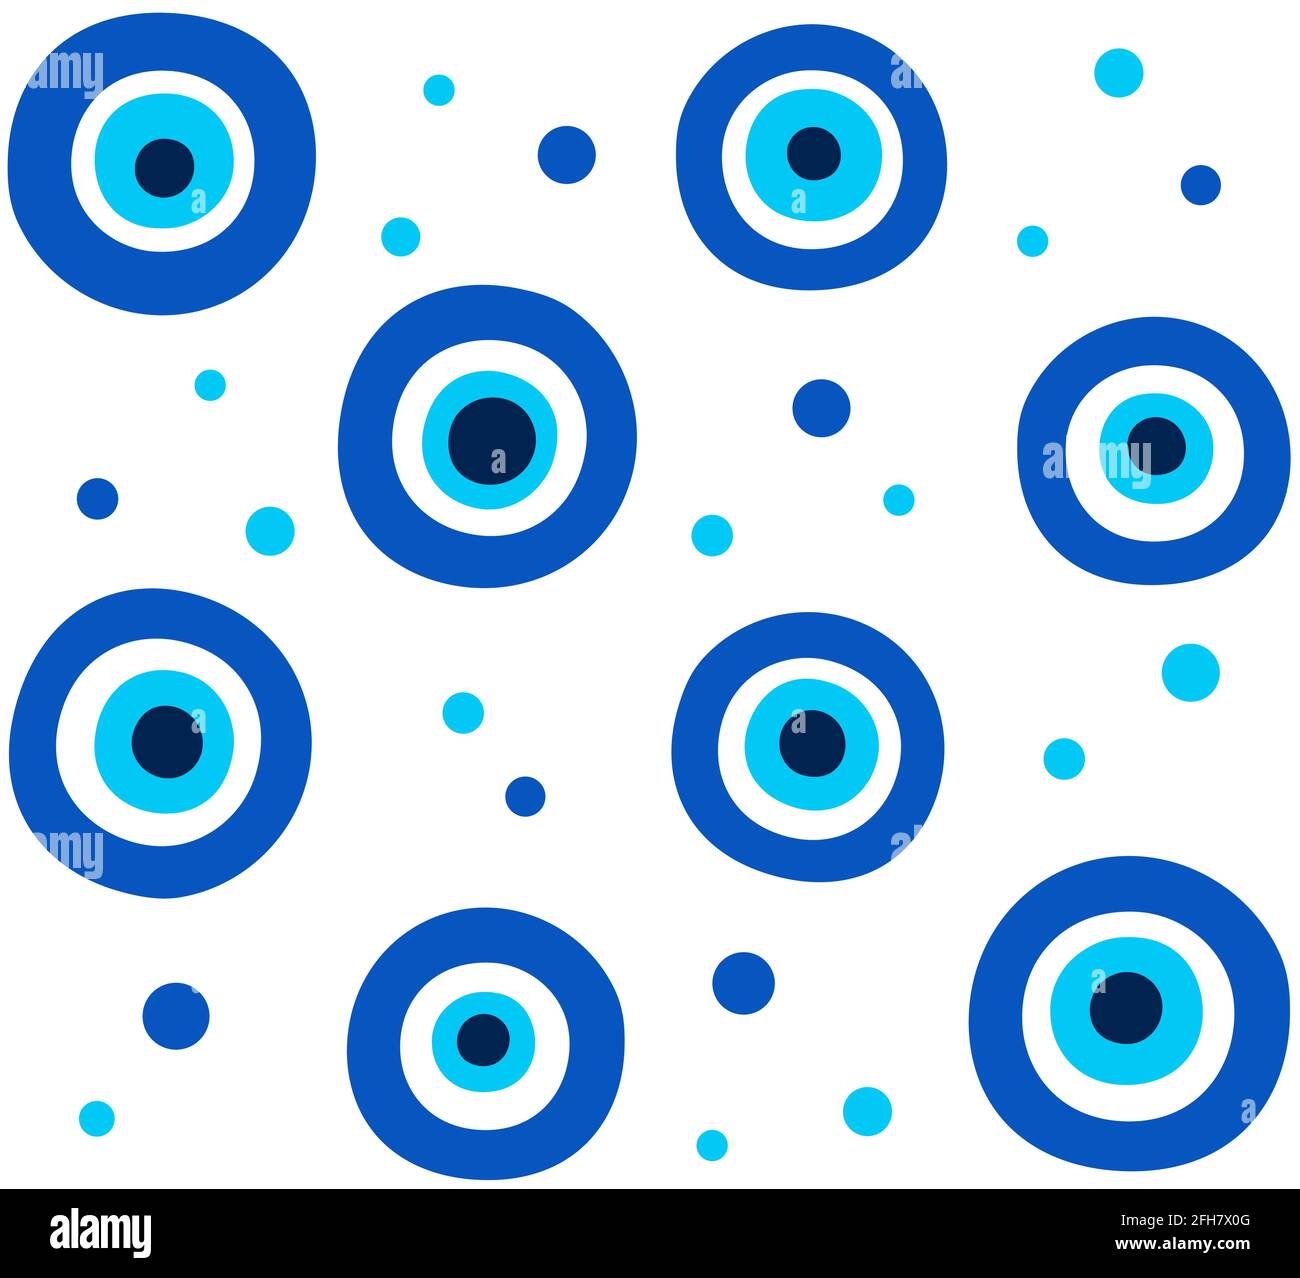 Nazar Boncugu, Turkish Evil Eye. Abstract blue eye seamless pattern. Vector art background texture illustration. Stock Vector